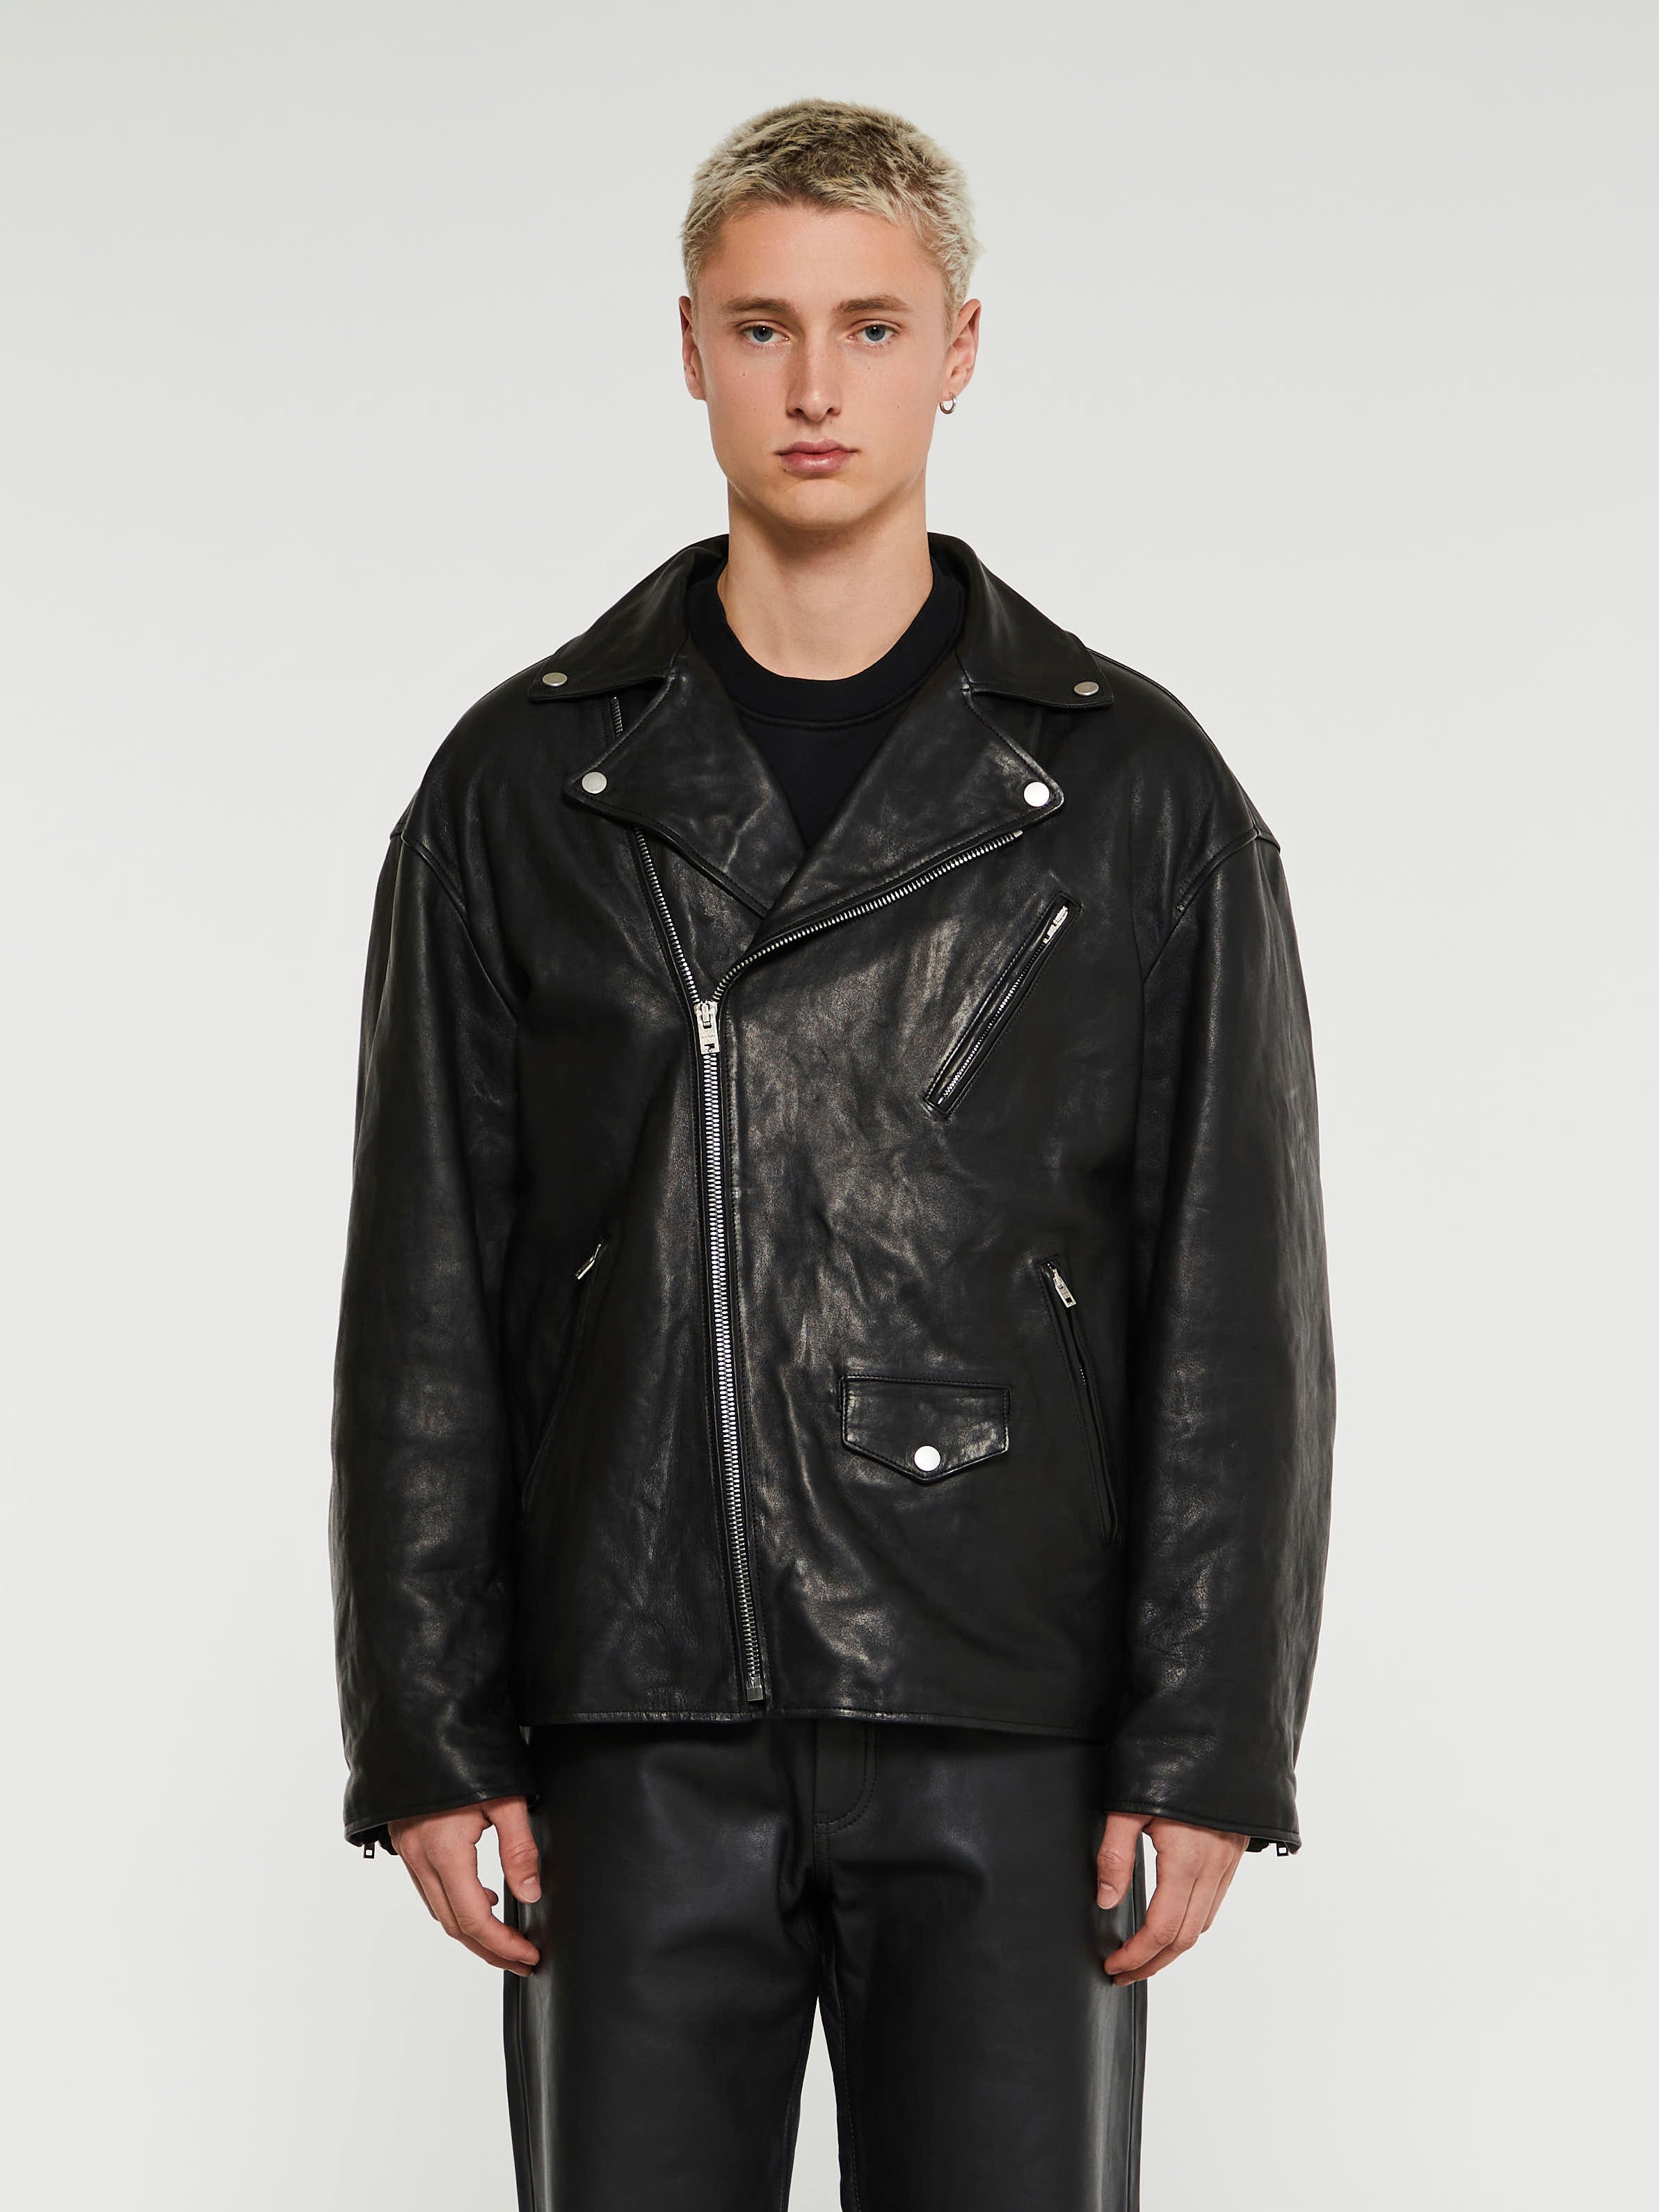 Acne Studios - Leather Jacket in Black